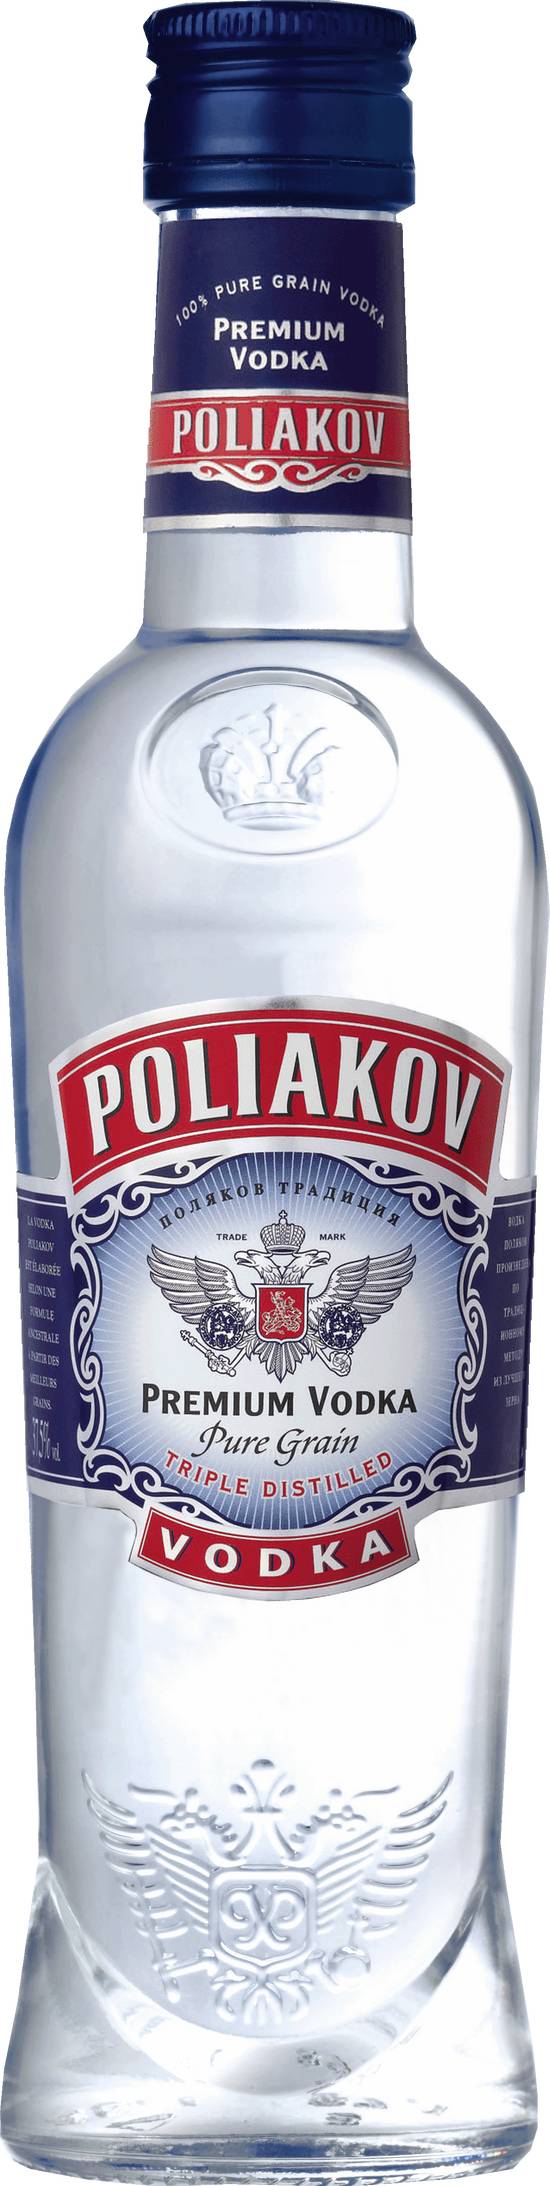 Poliakov - Vodka pure grain triple distilled (350 ml)